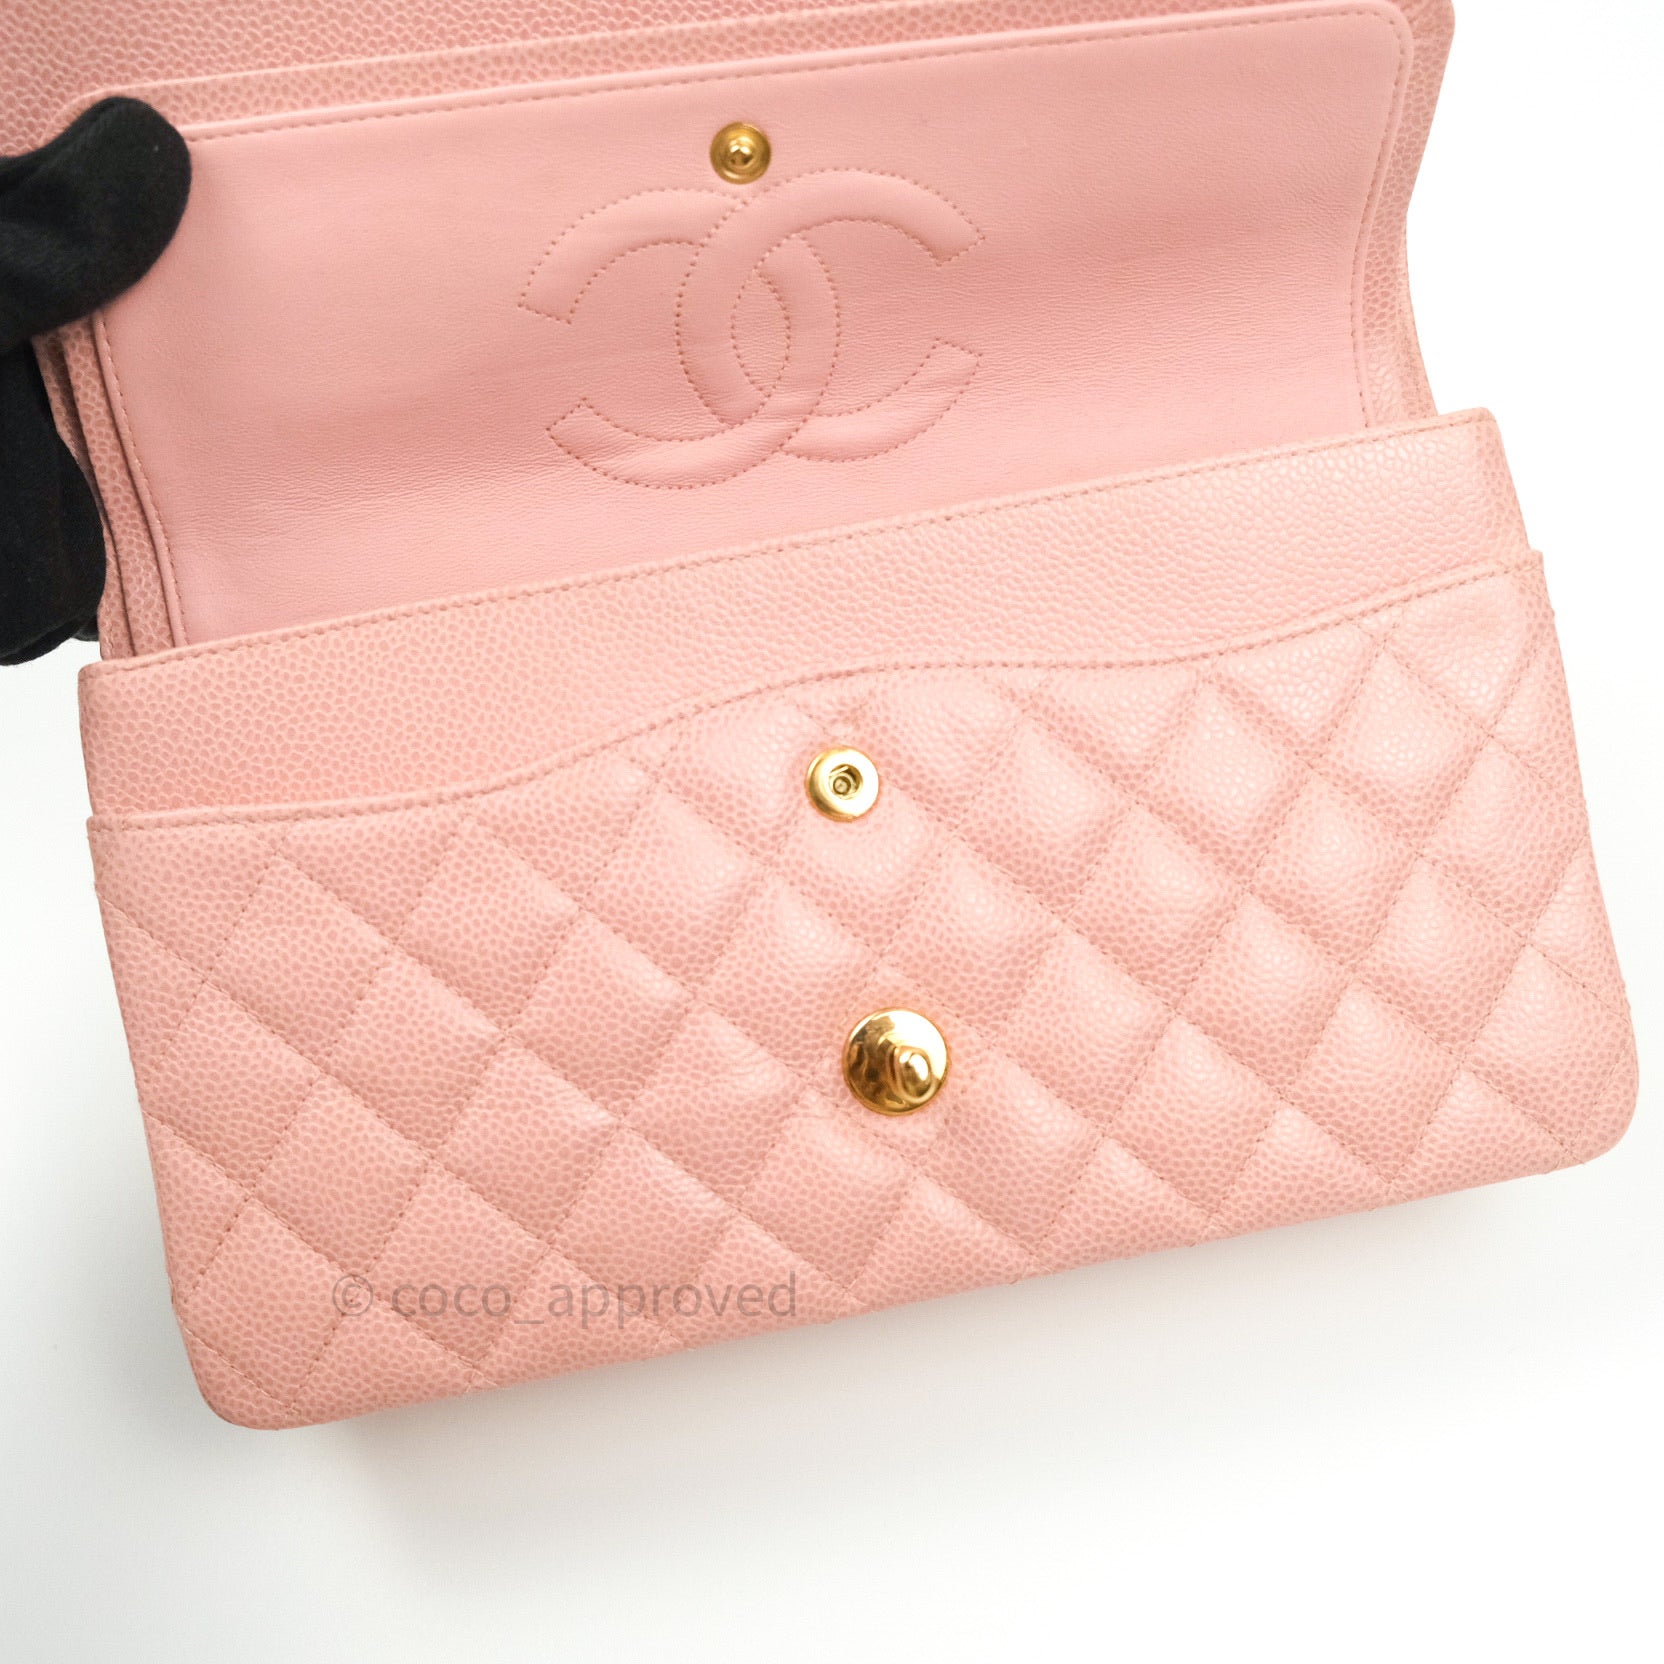 Chanel Classic Small S/M Flap Sakura Pink Caviar Gold Hardware 21S